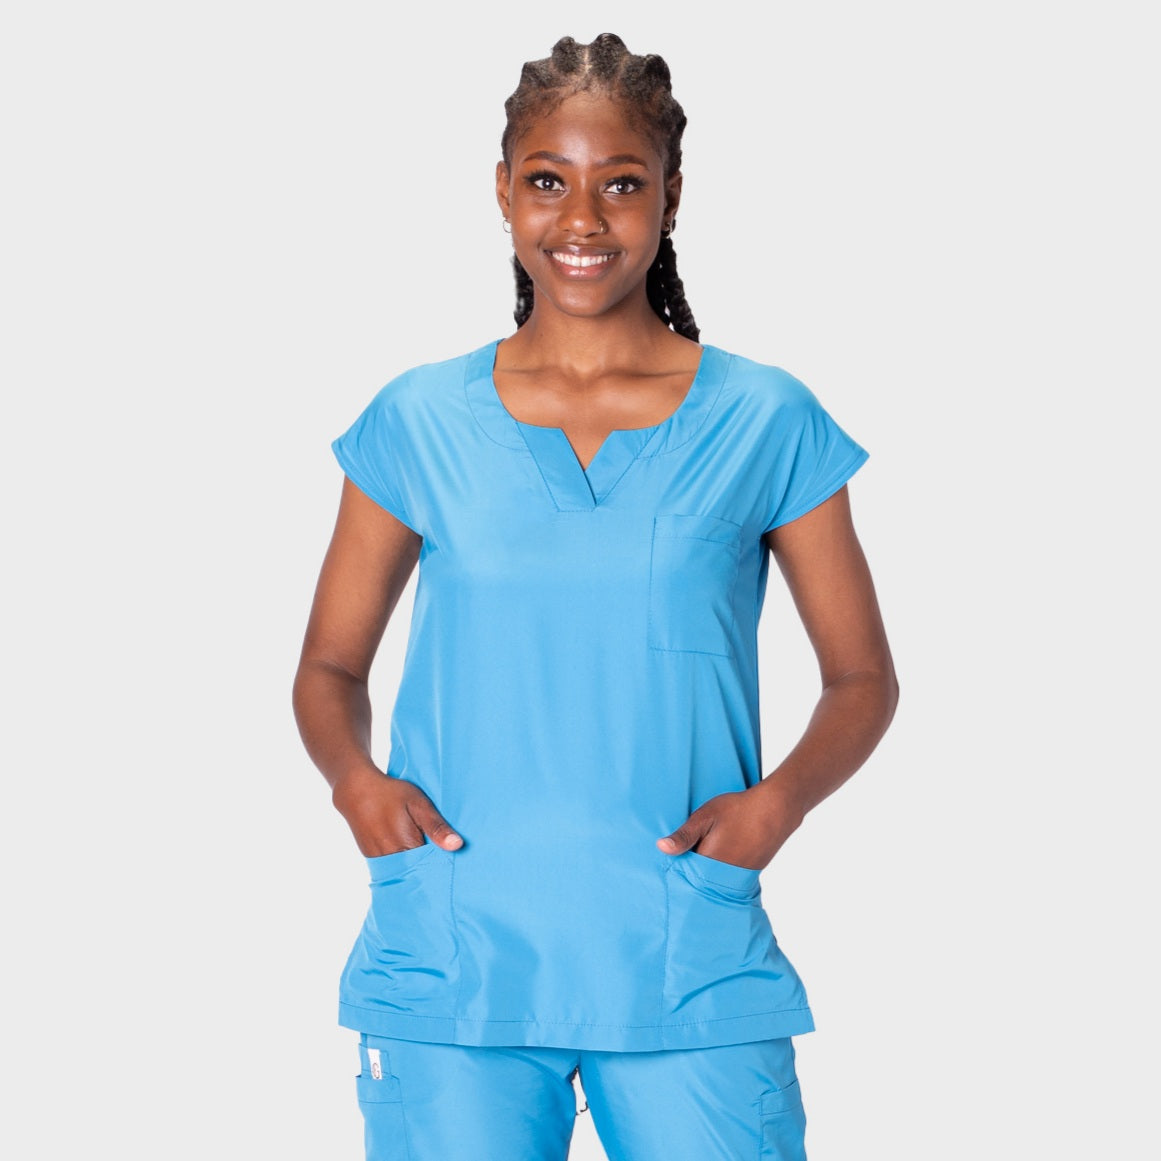 LADIES ACTIVE AR NALEDI TOP - Greens Medi Scrubs South Africa - Premium Medical Uniforms & Apparel - Delivery Across SA 